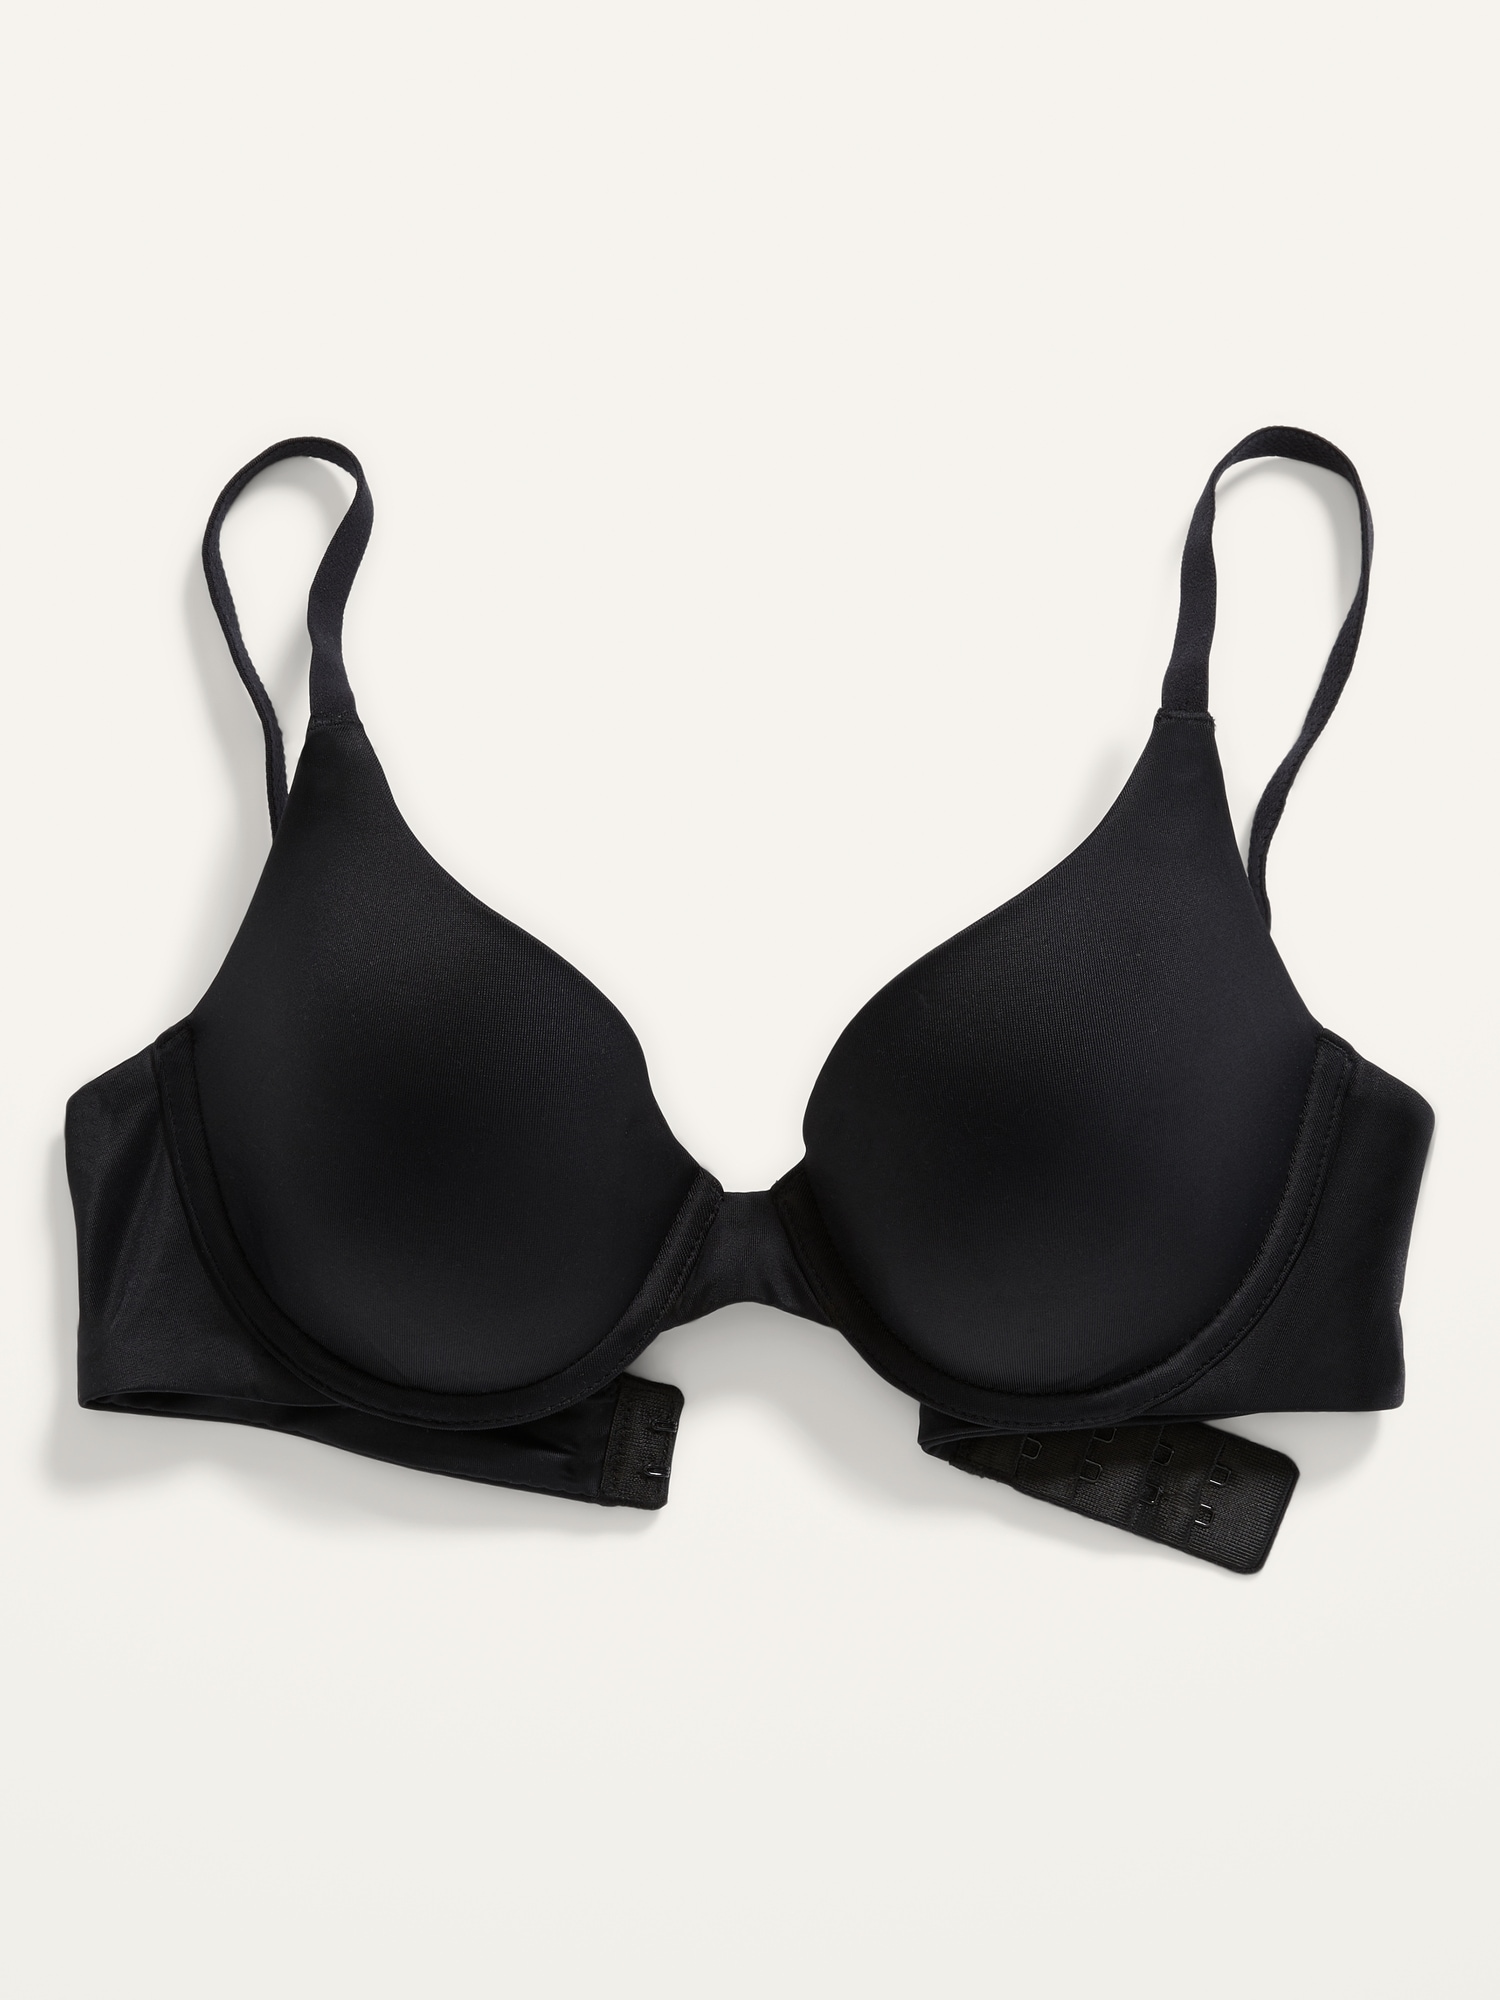 Underwear for Women Plus Size Full Coverage Microfiber Underwire Everyday  Smoothing Tshirt Bra - 42DD Black